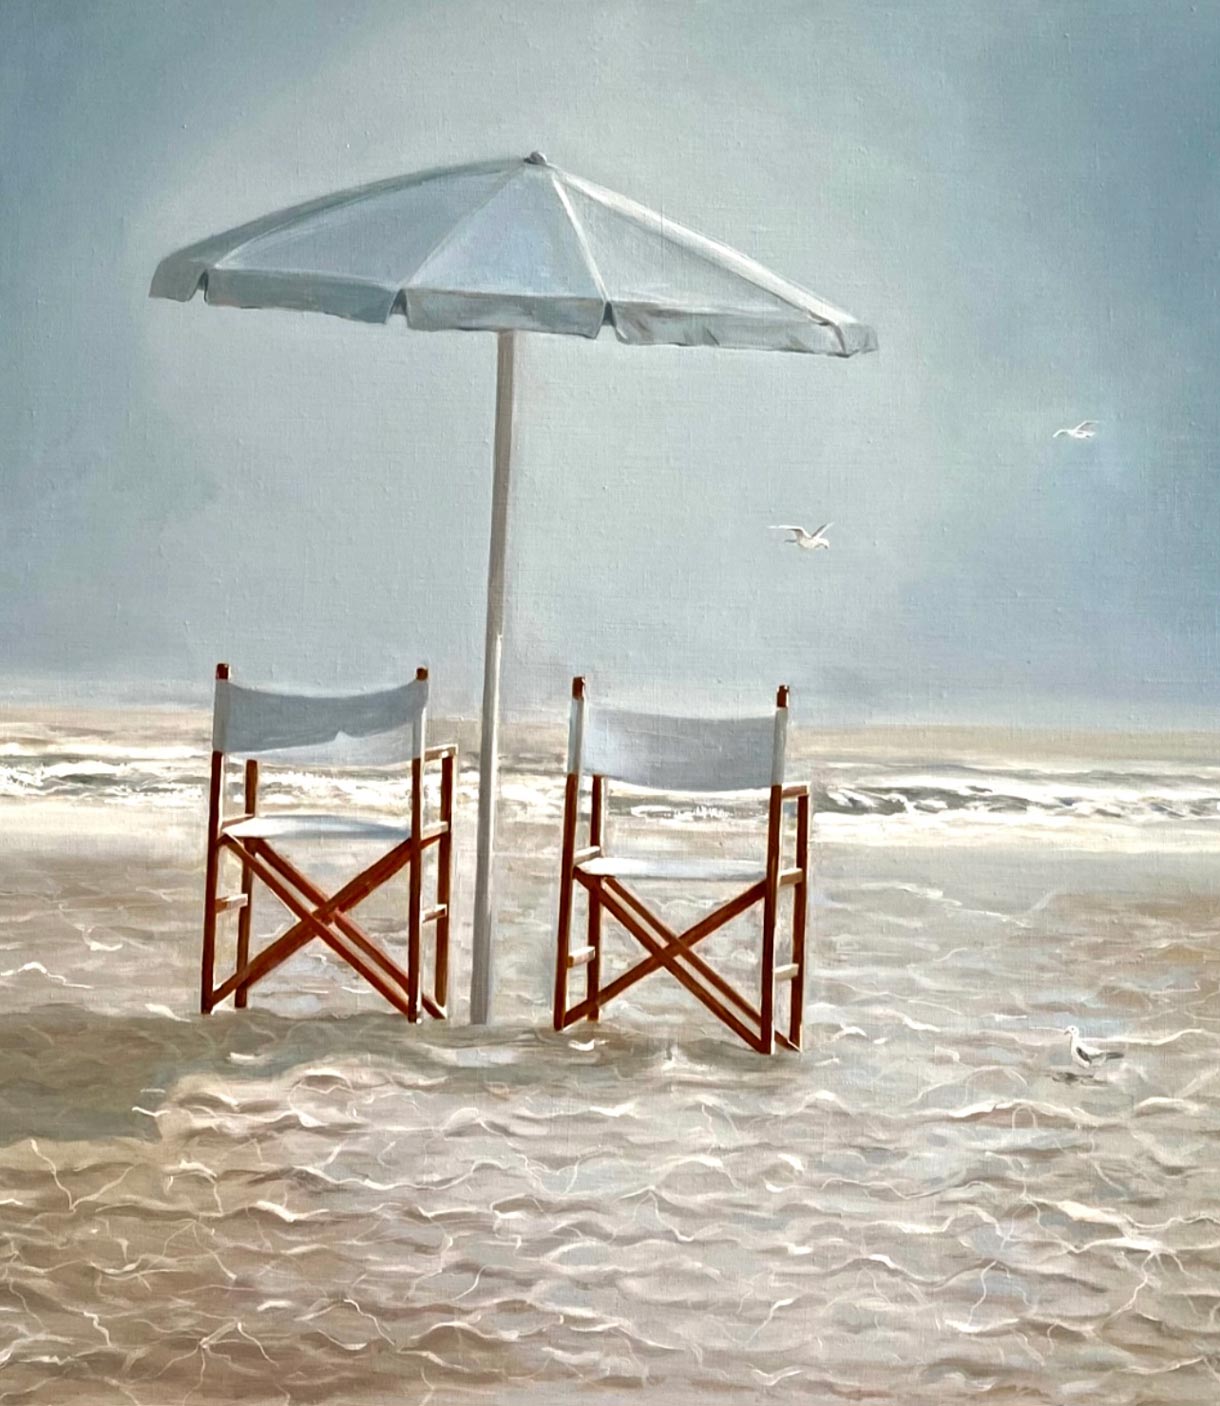 Buy painting online Singapore Exquisite Art Olga Mortensen Seaside